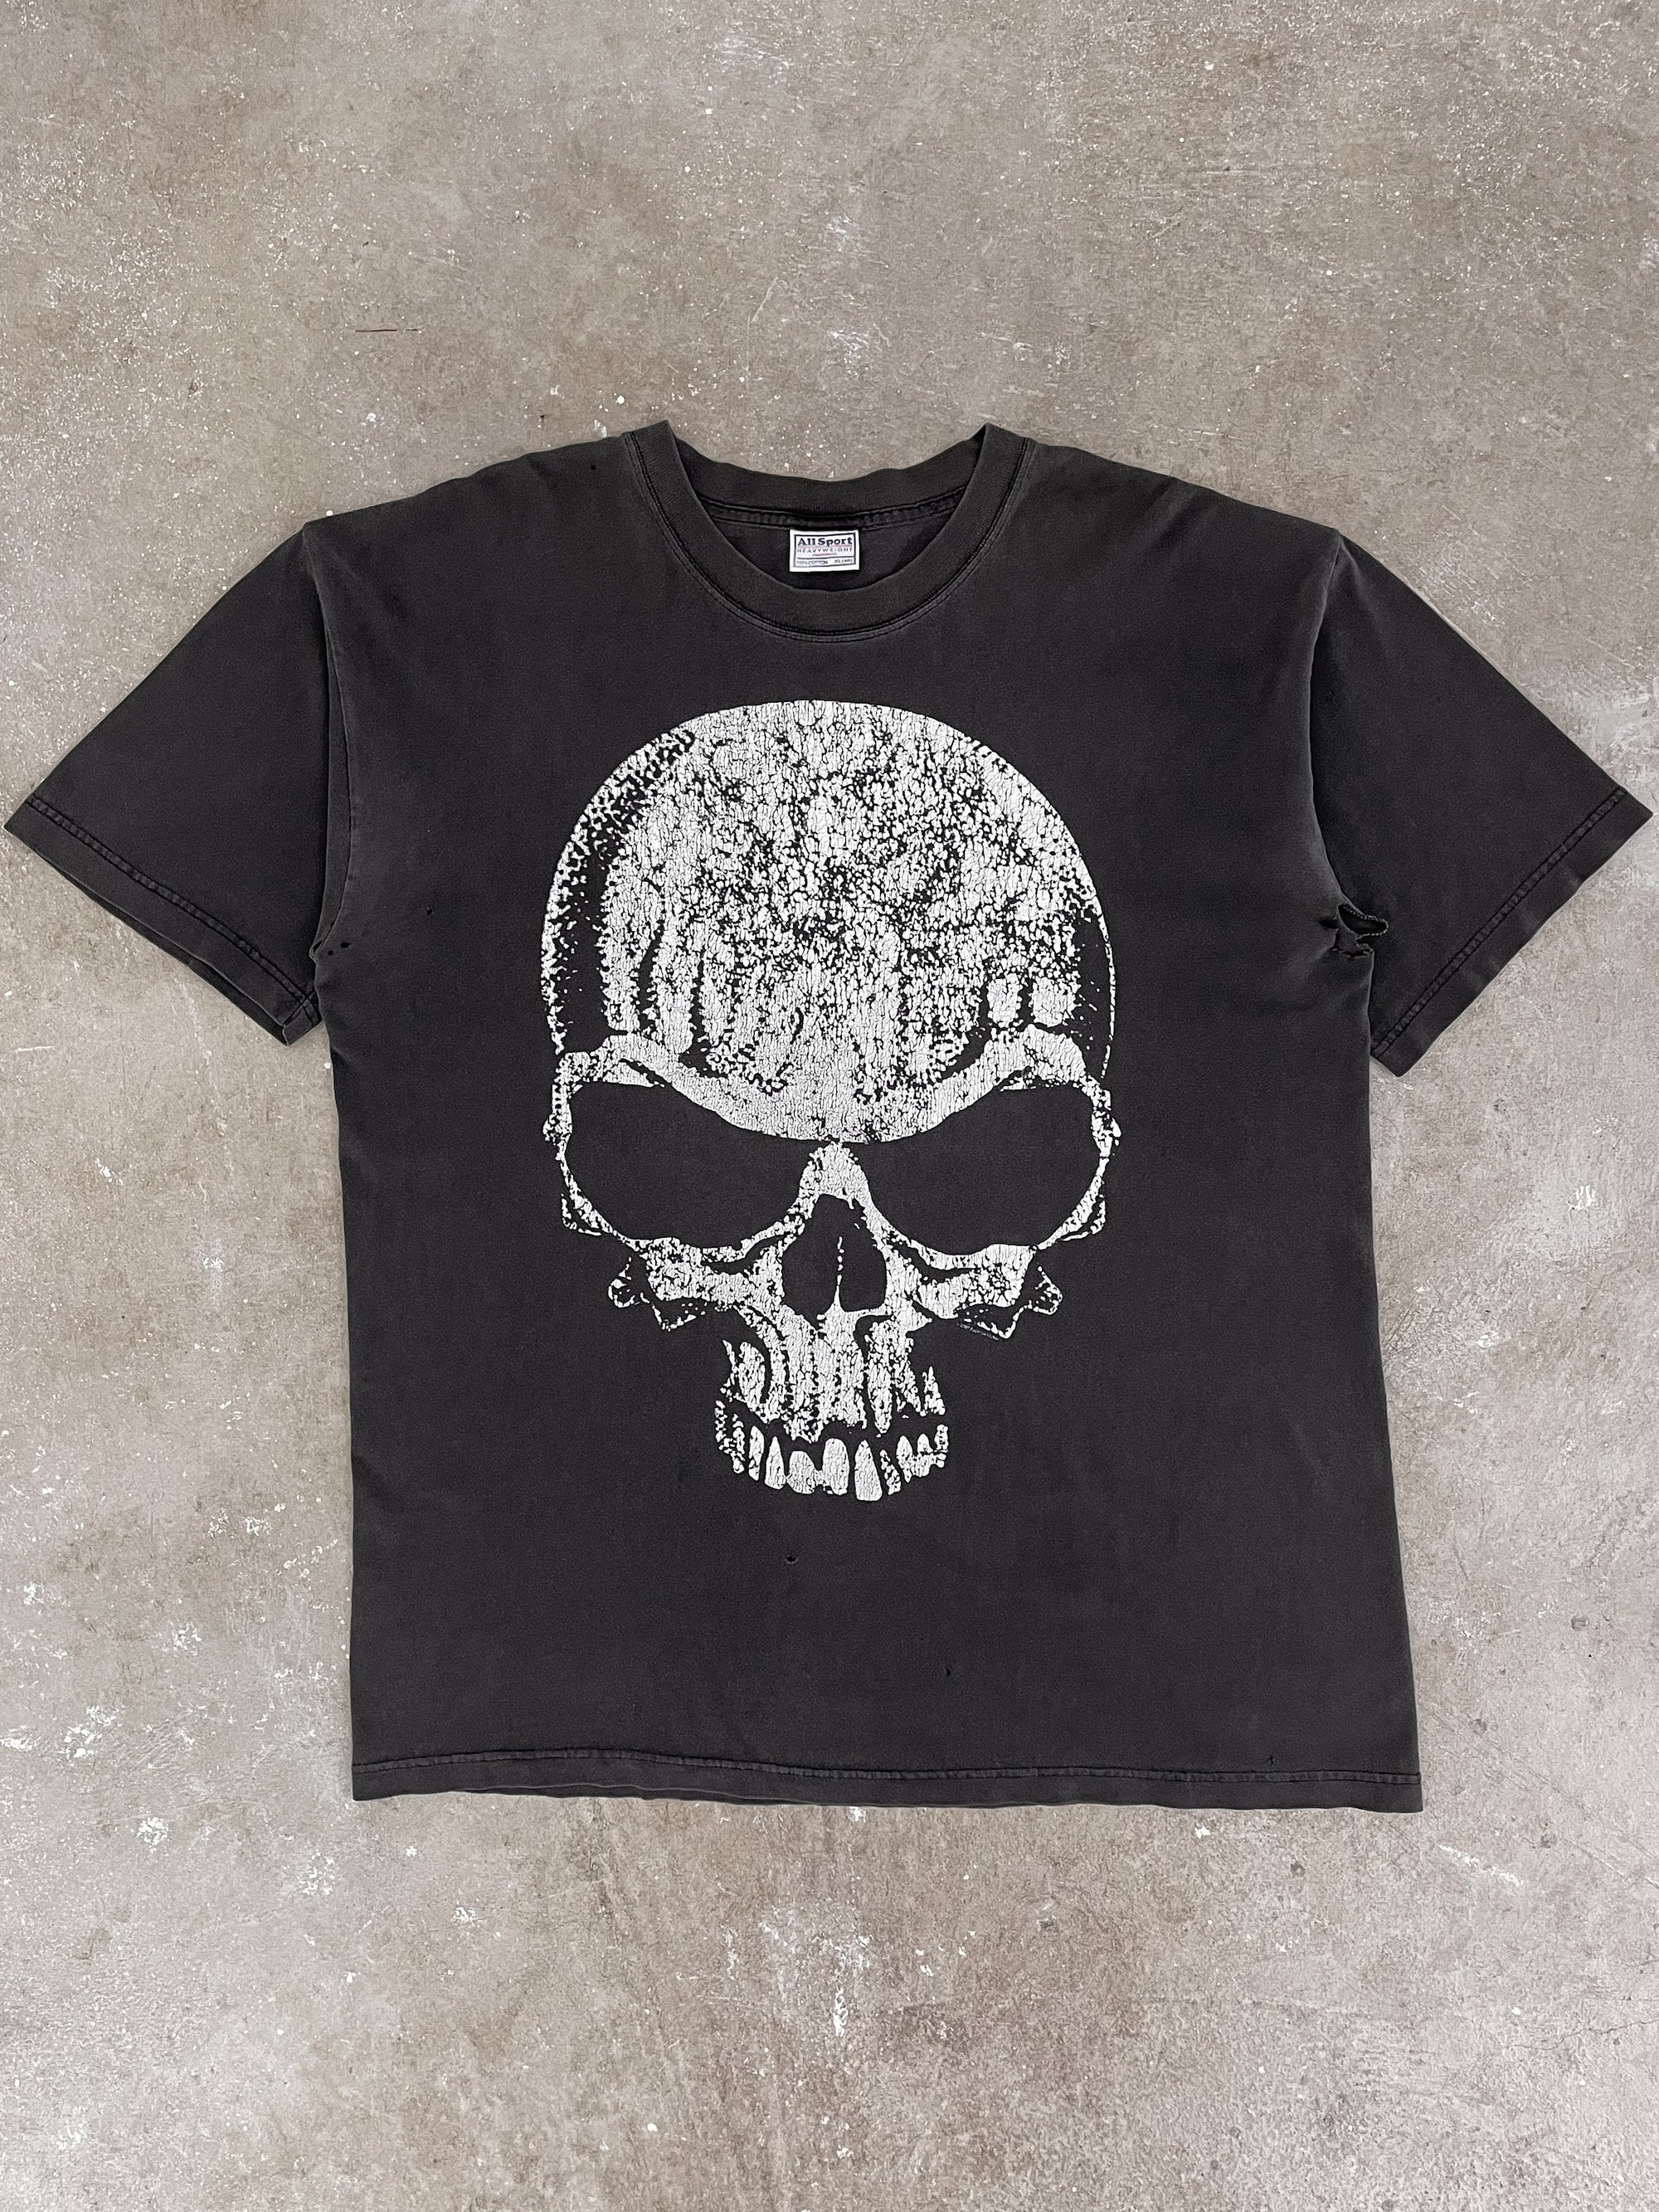 2000s “Skull” Fashion Victim Tee (XL)